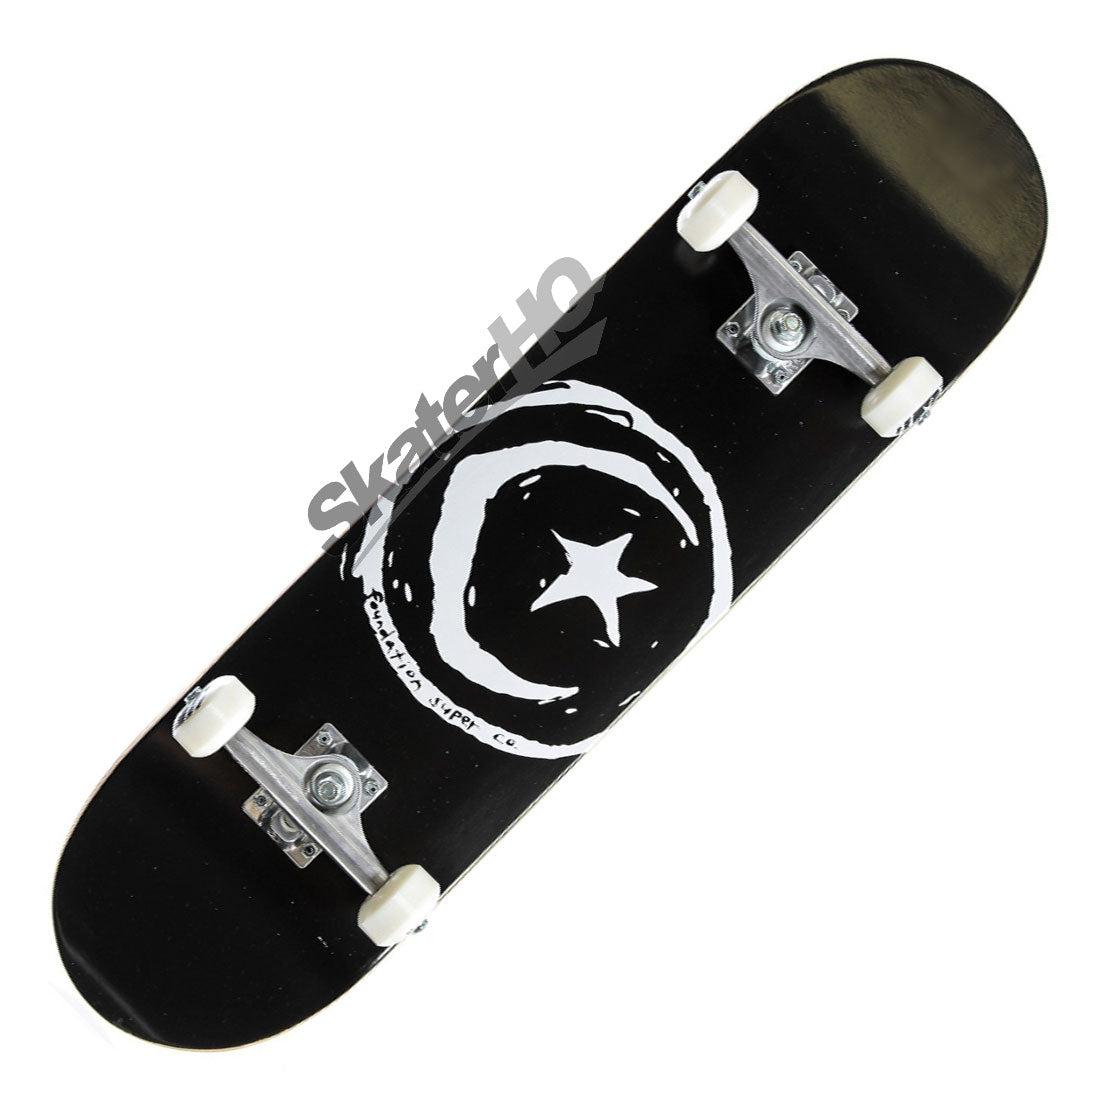 Foundation Star & Moon 8.0 Complete - Black Skateboard Completes Modern Street